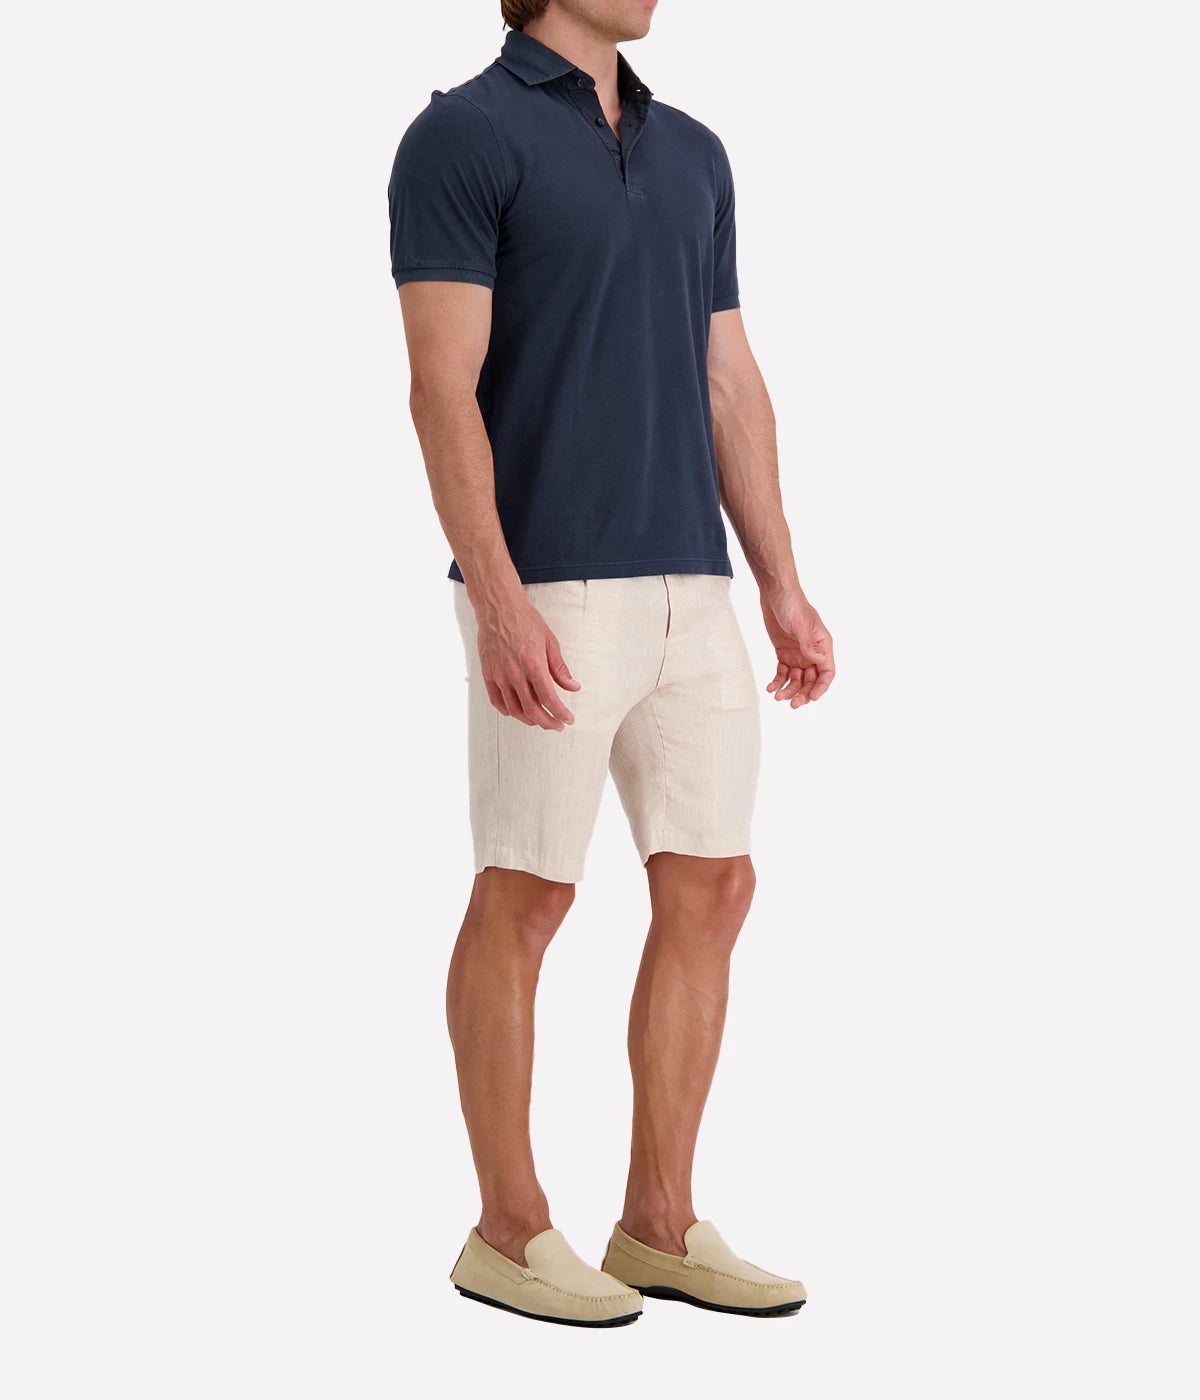 Short Sleeve Polo in Navy Blue